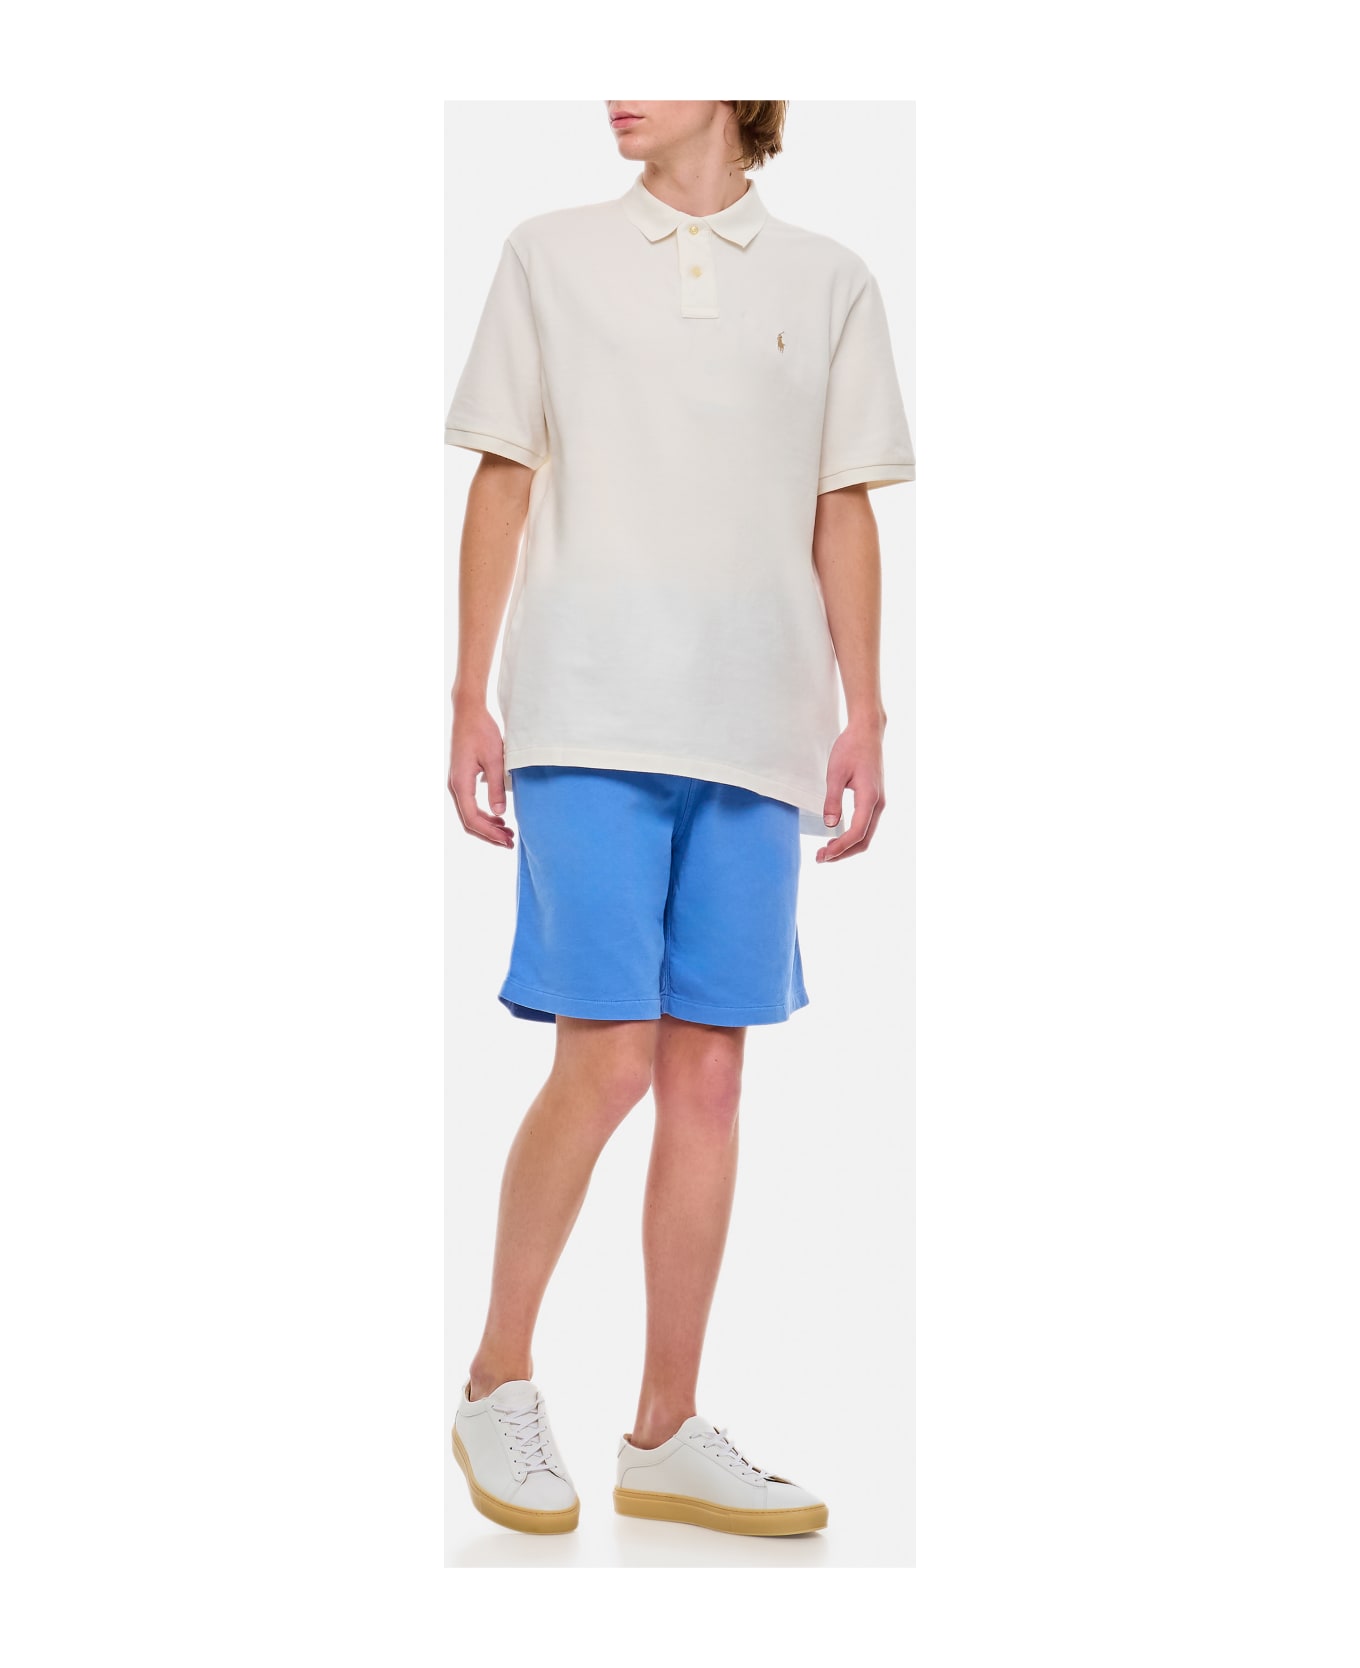 Polo Ralph Lauren Cotton Polo Shirt - Beige ポロシャツ